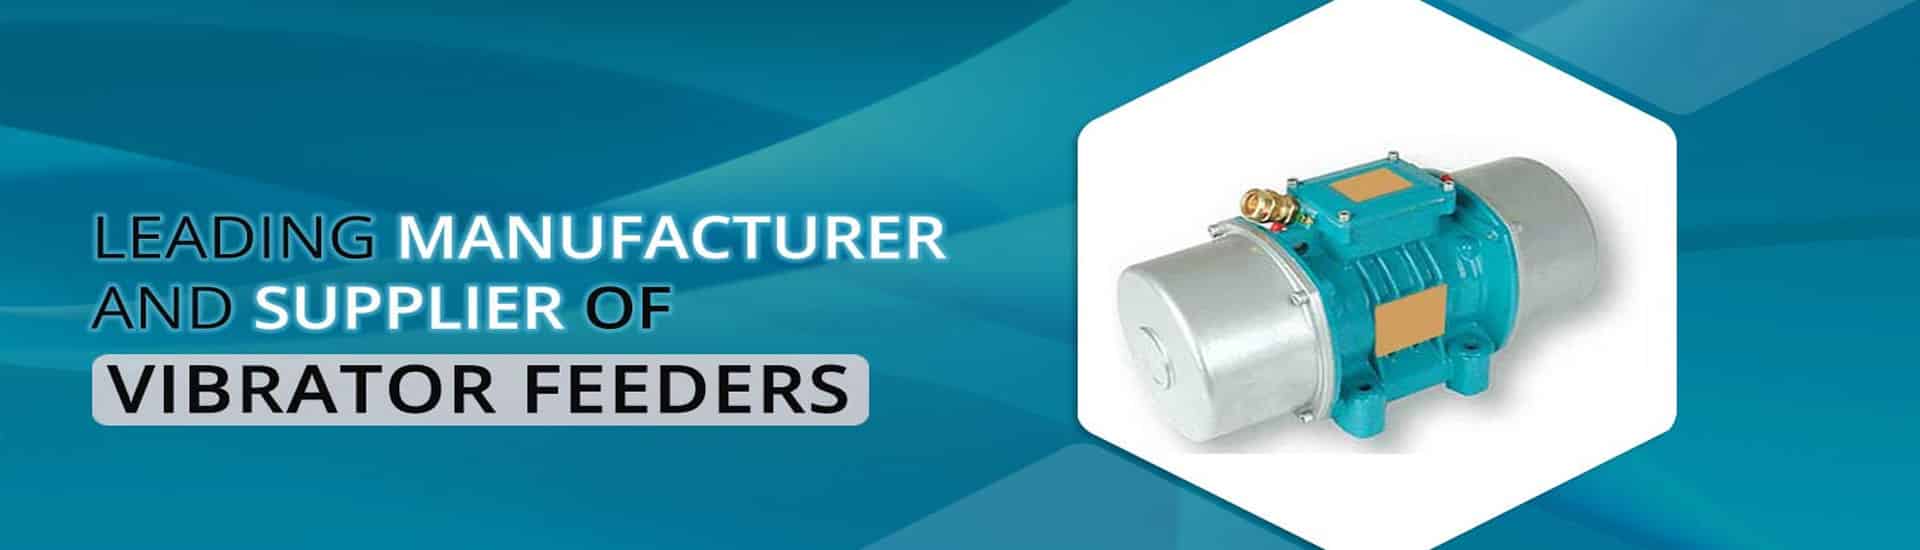 manufacturer of vibrator feeders